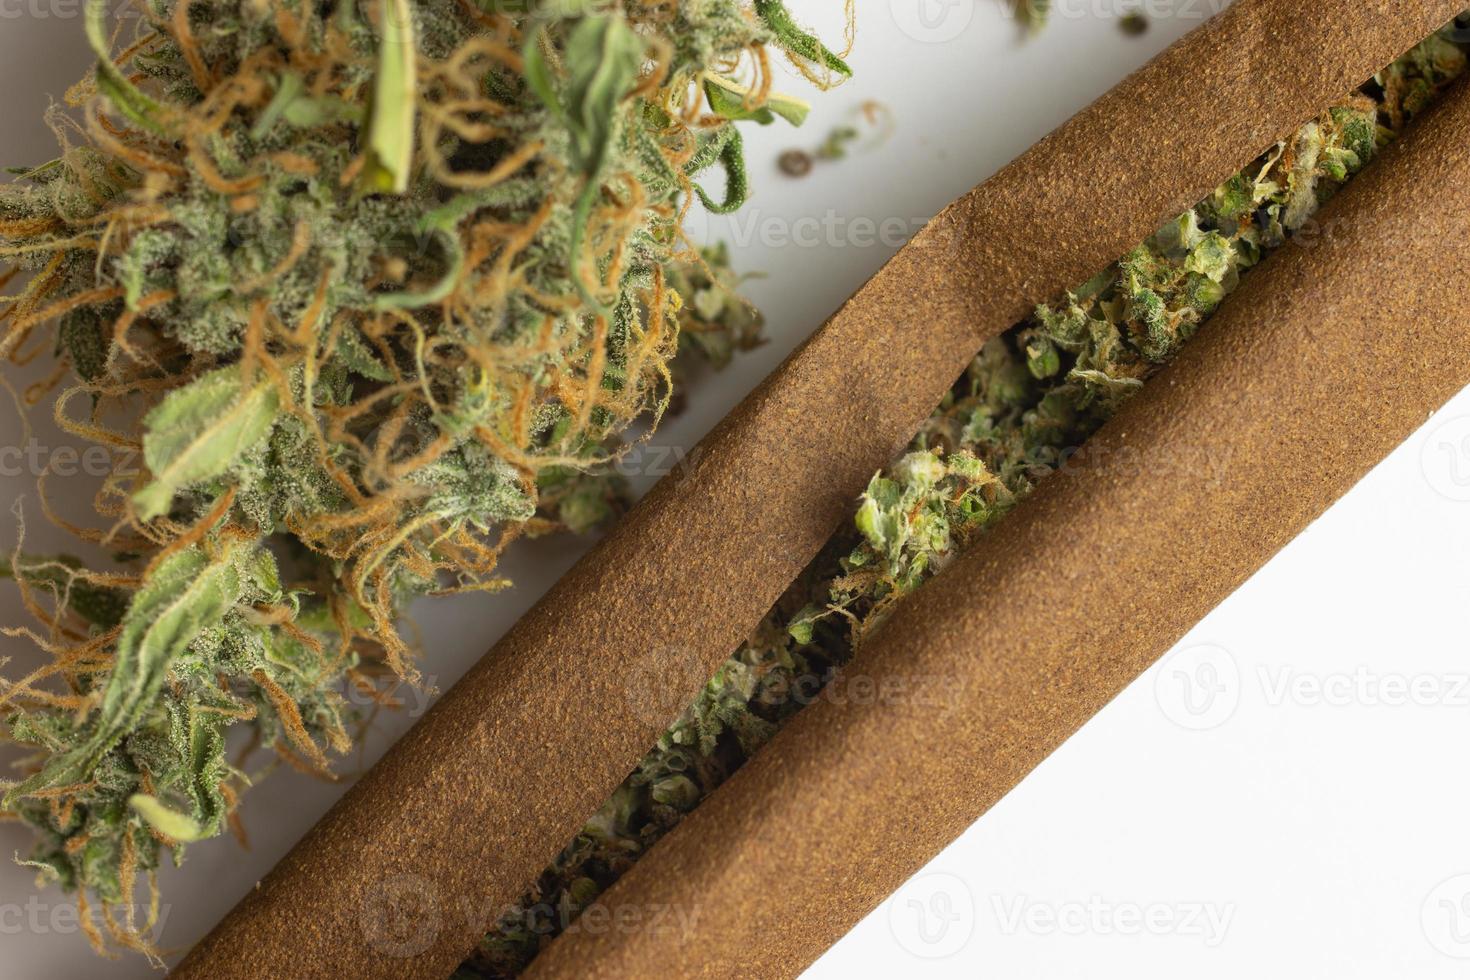 cannabis i trubbig rulla och marijuana knopp närbild foto